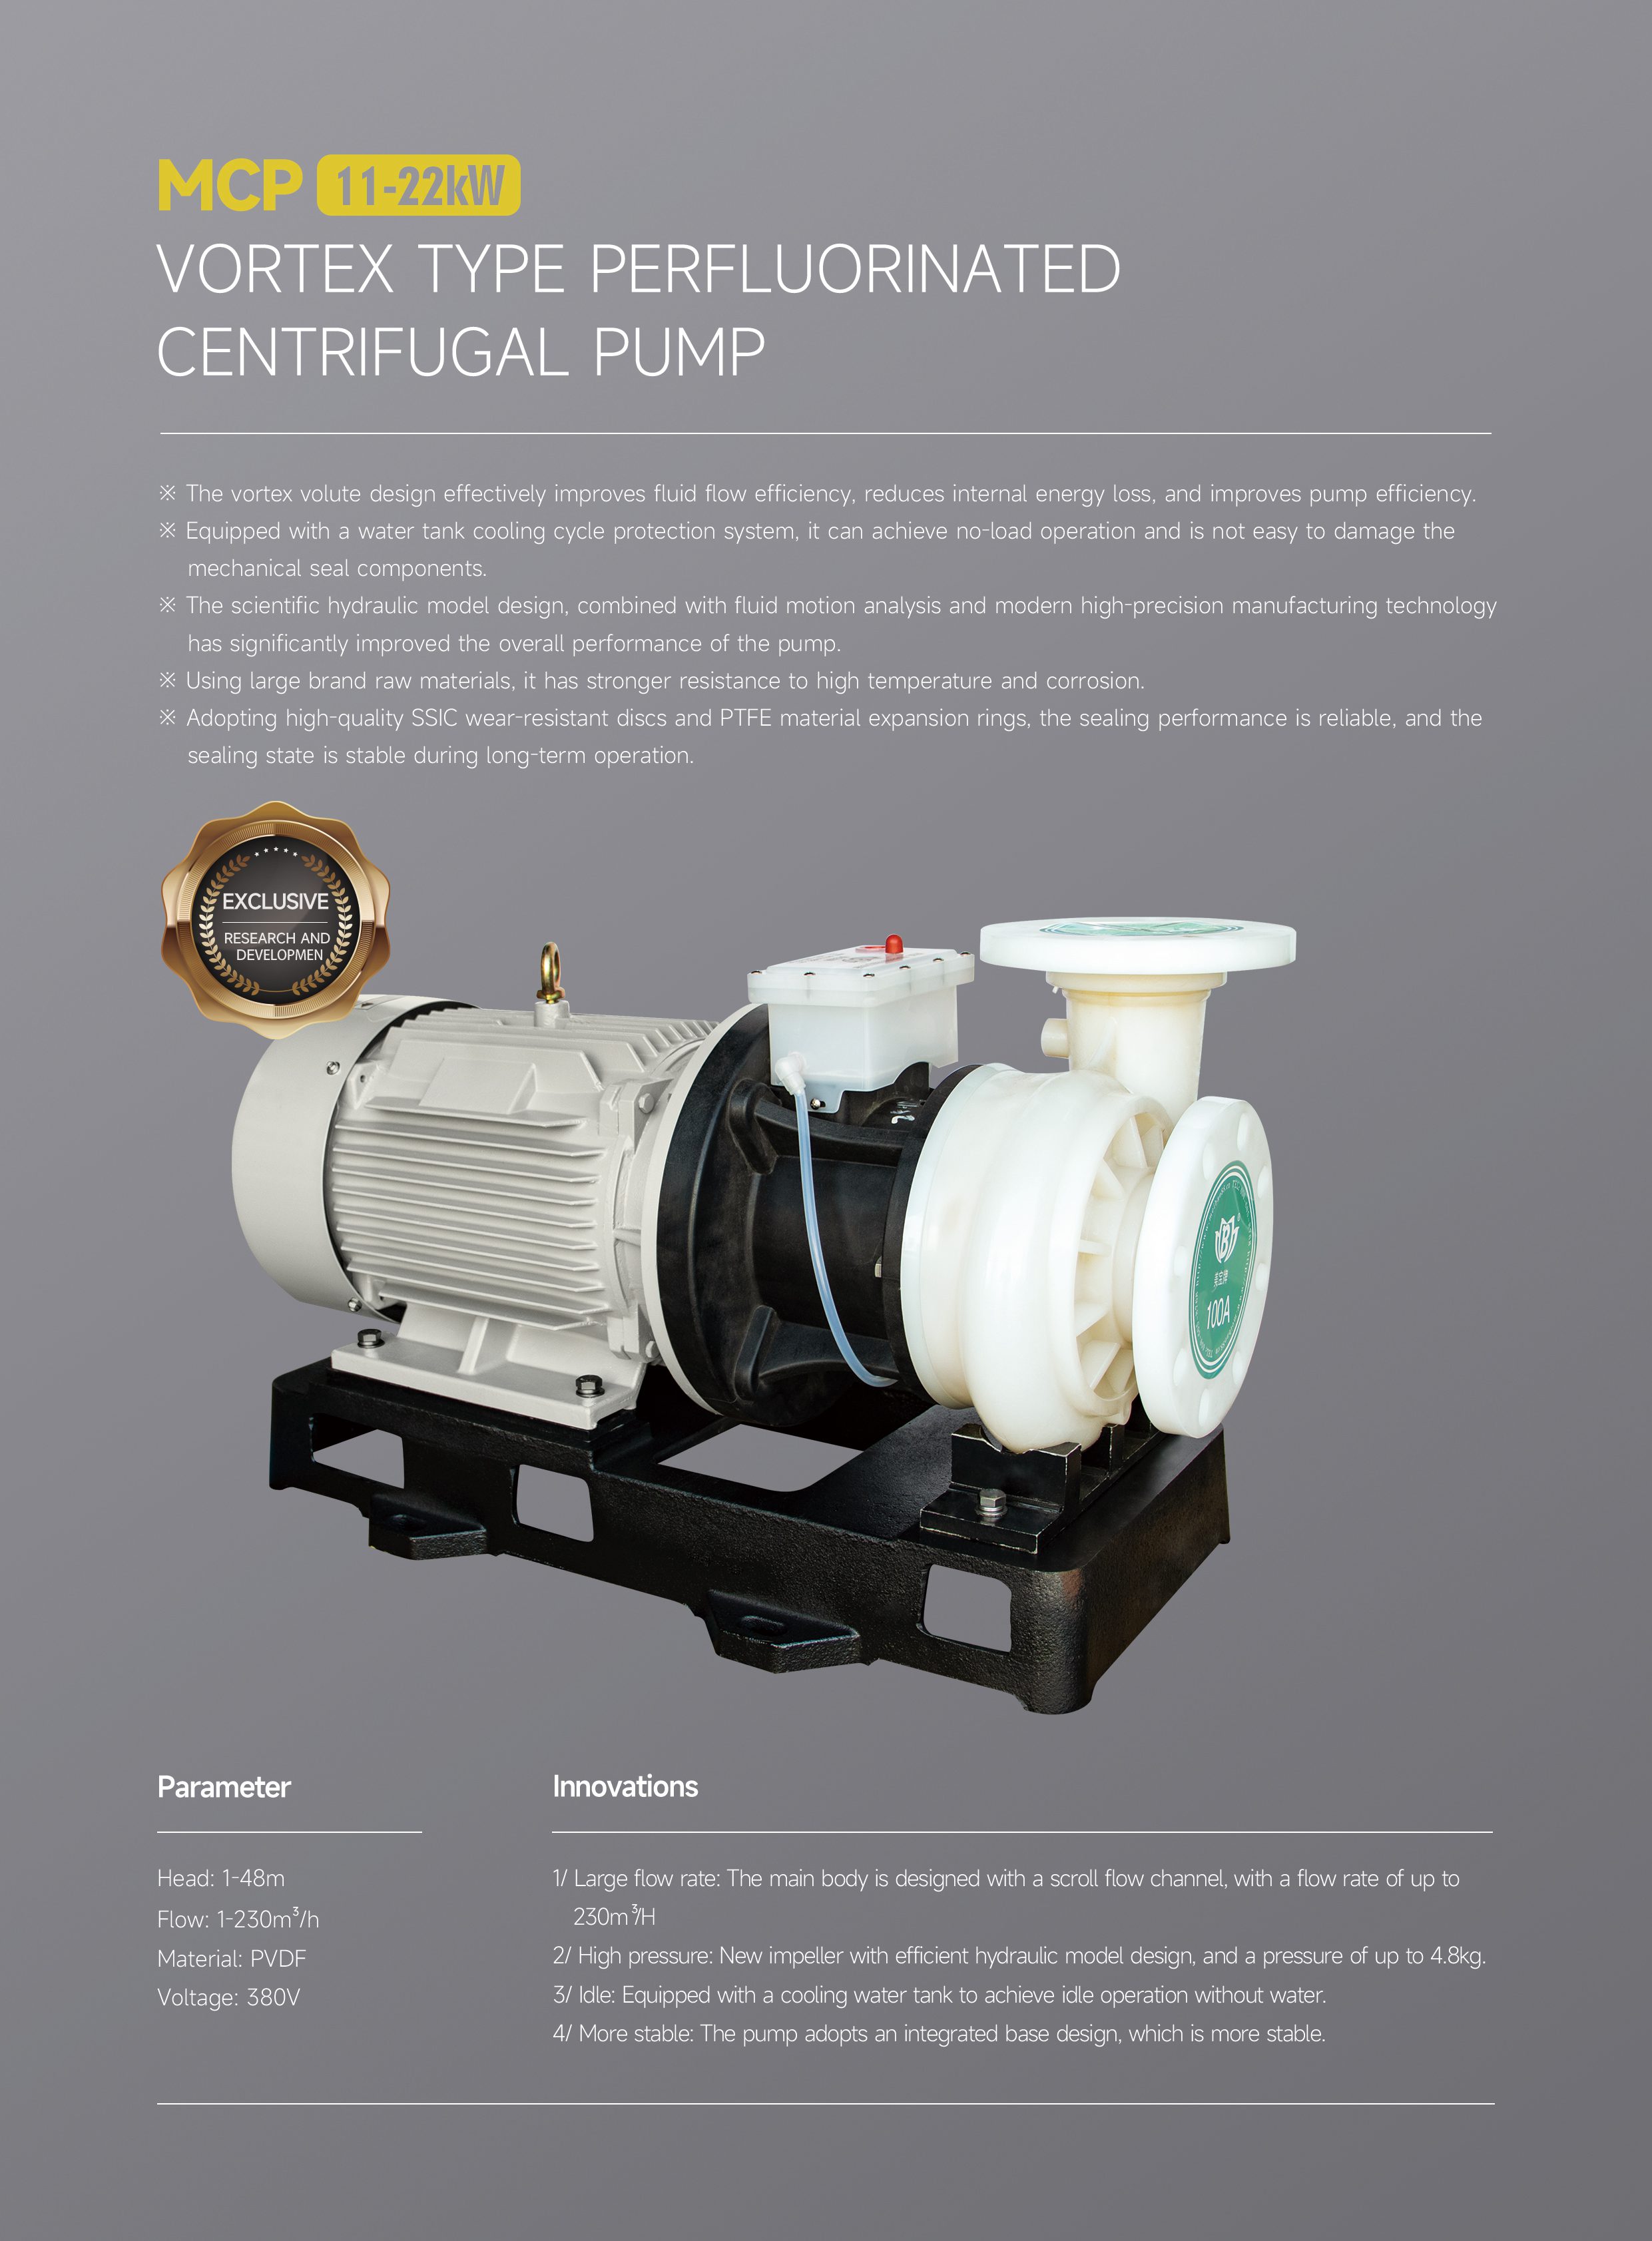 vortex type perfluorinated centrifugal pump(旋涡式全氟离心泵).jpg